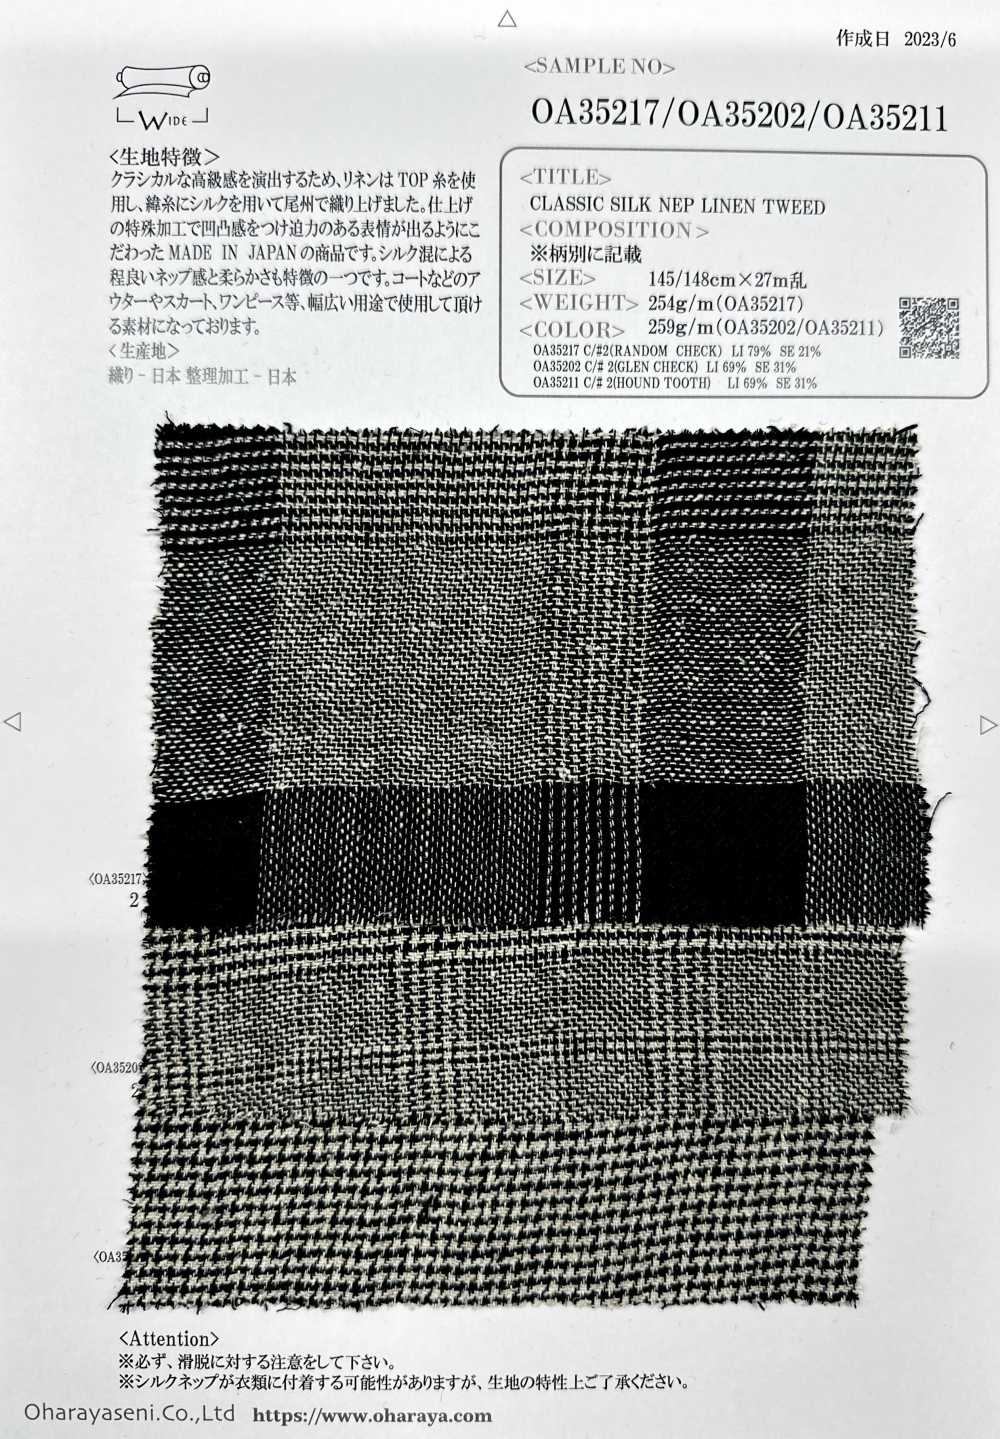 OA35211 LIN CLASSIQUE NEP LIN TWEED[Fabrication De Textile] Oharayaseni